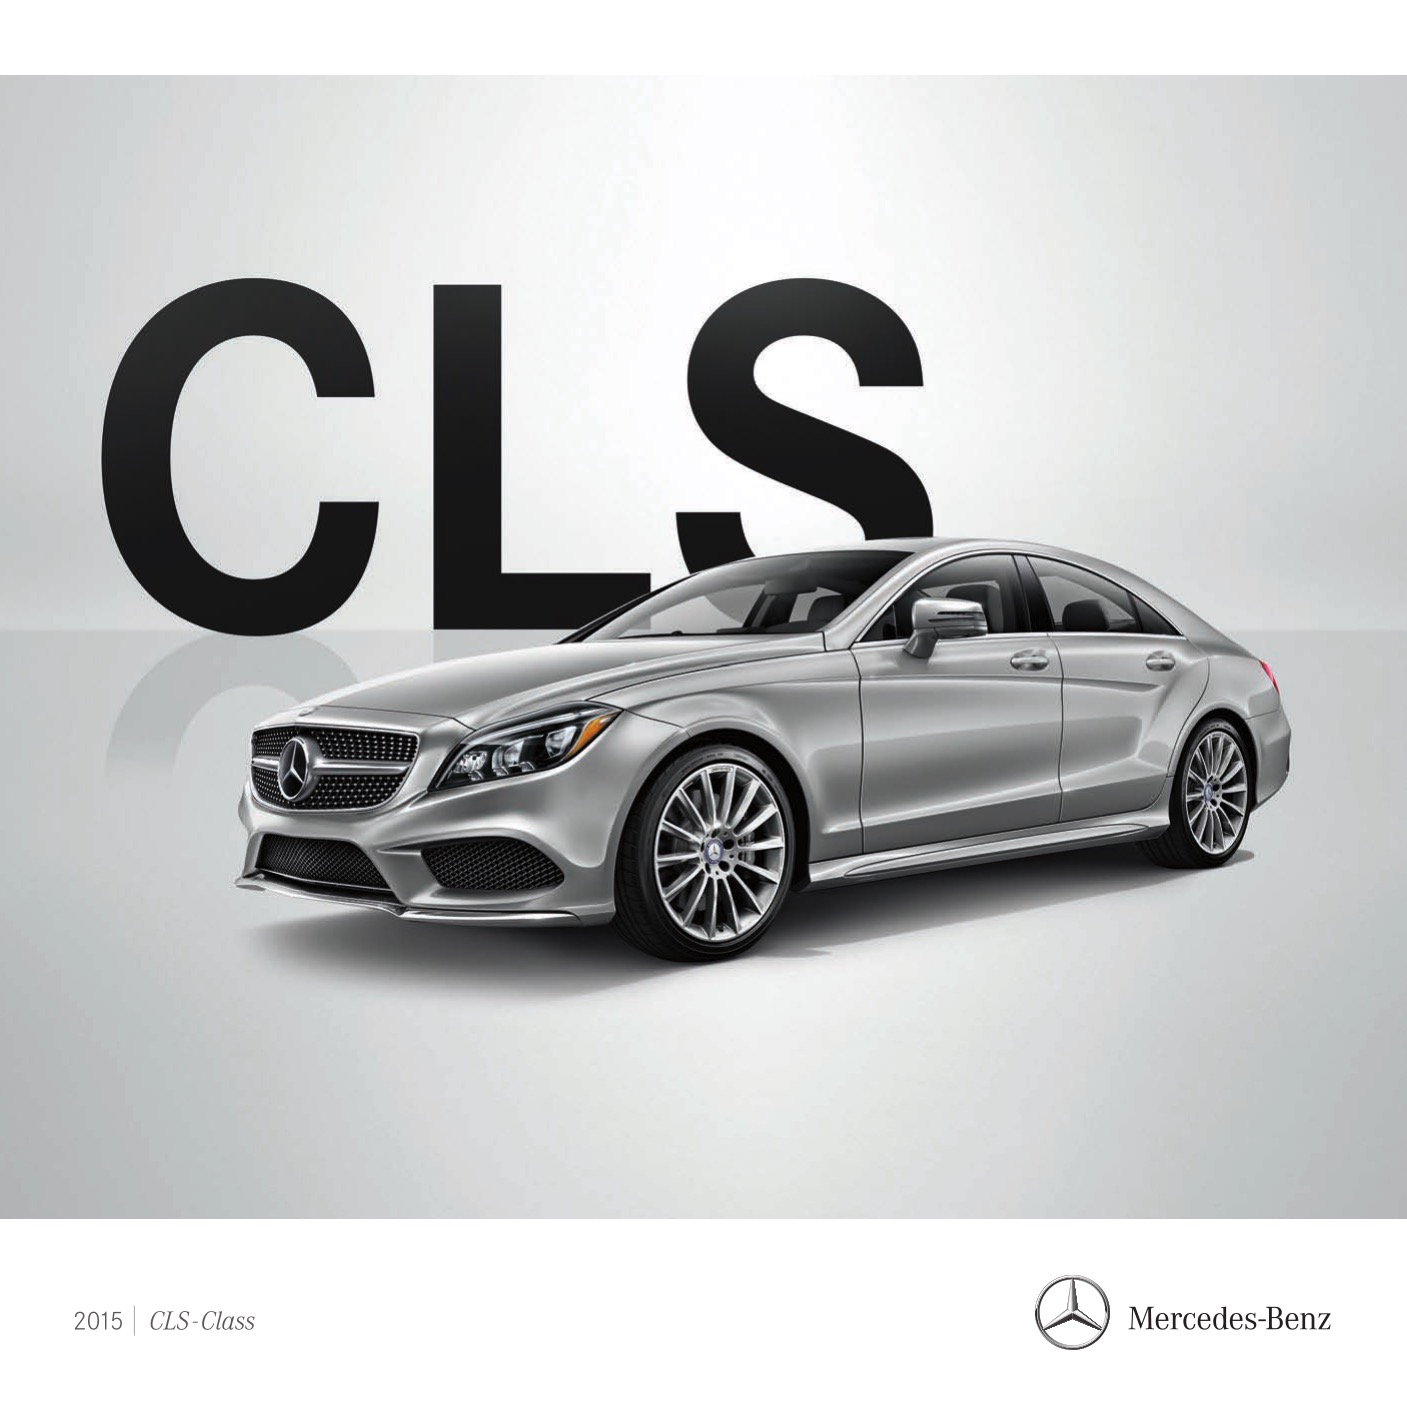 2015 Mercedes-Benz CLS-Class Brochure